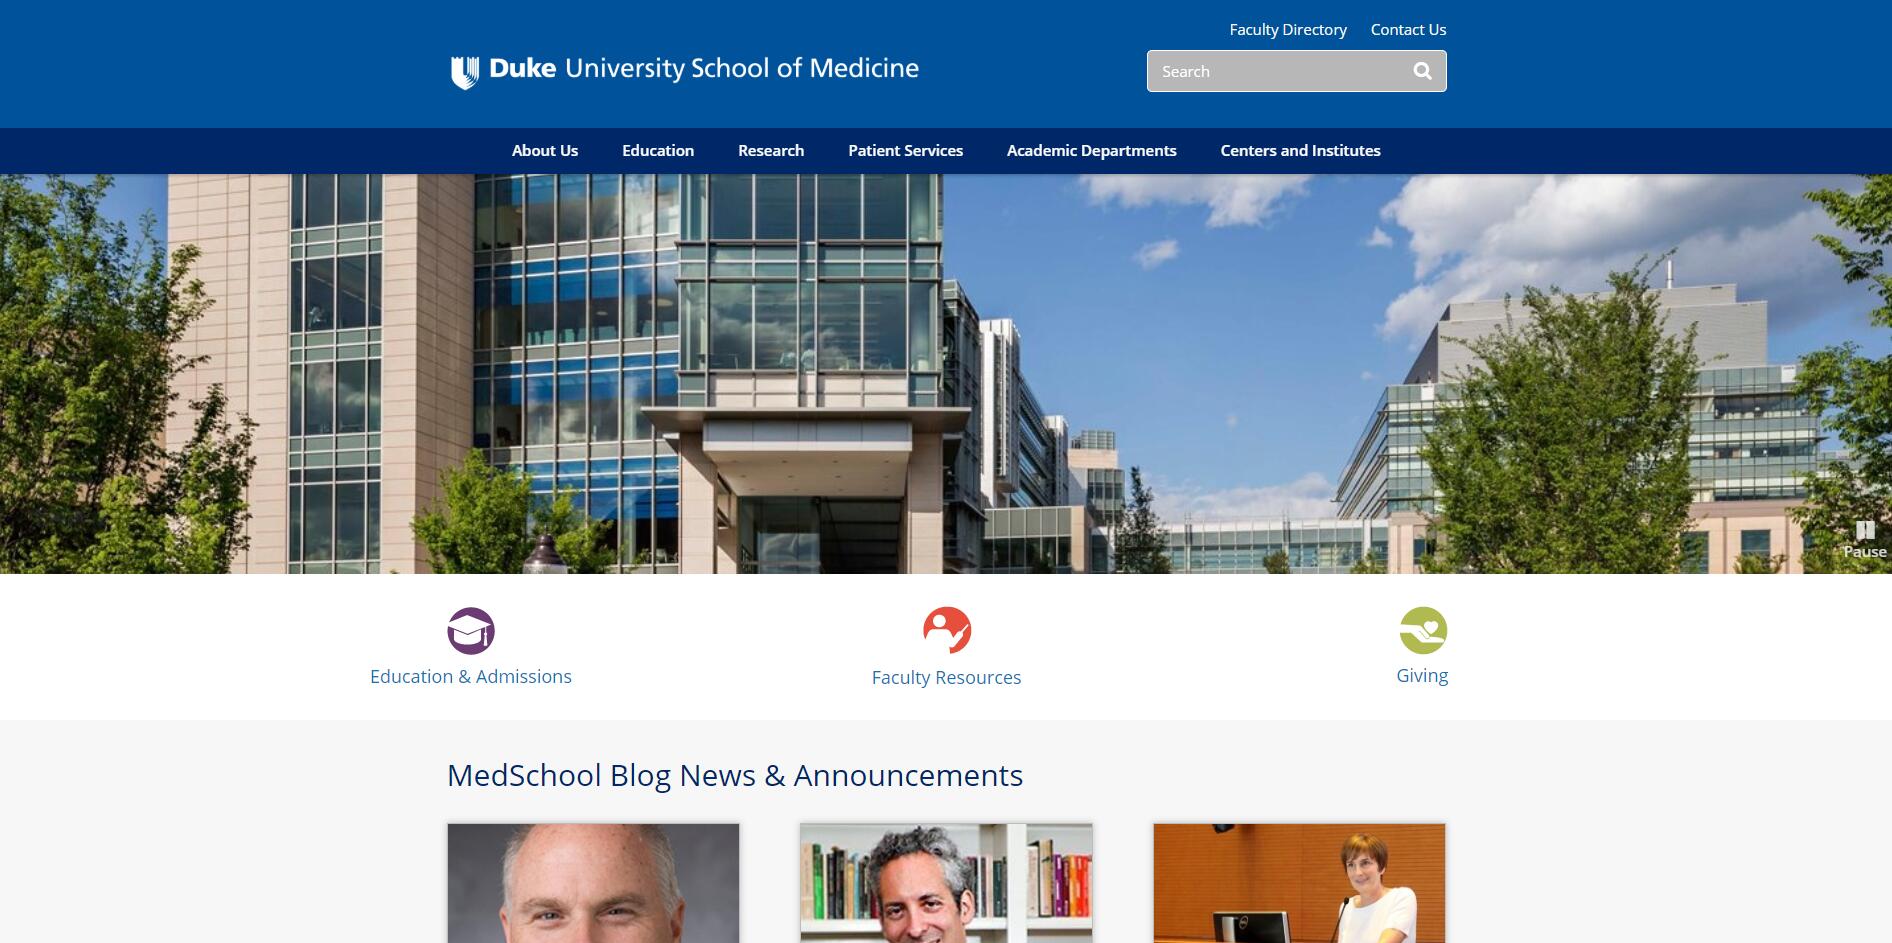 The School of Medicine at Duke University